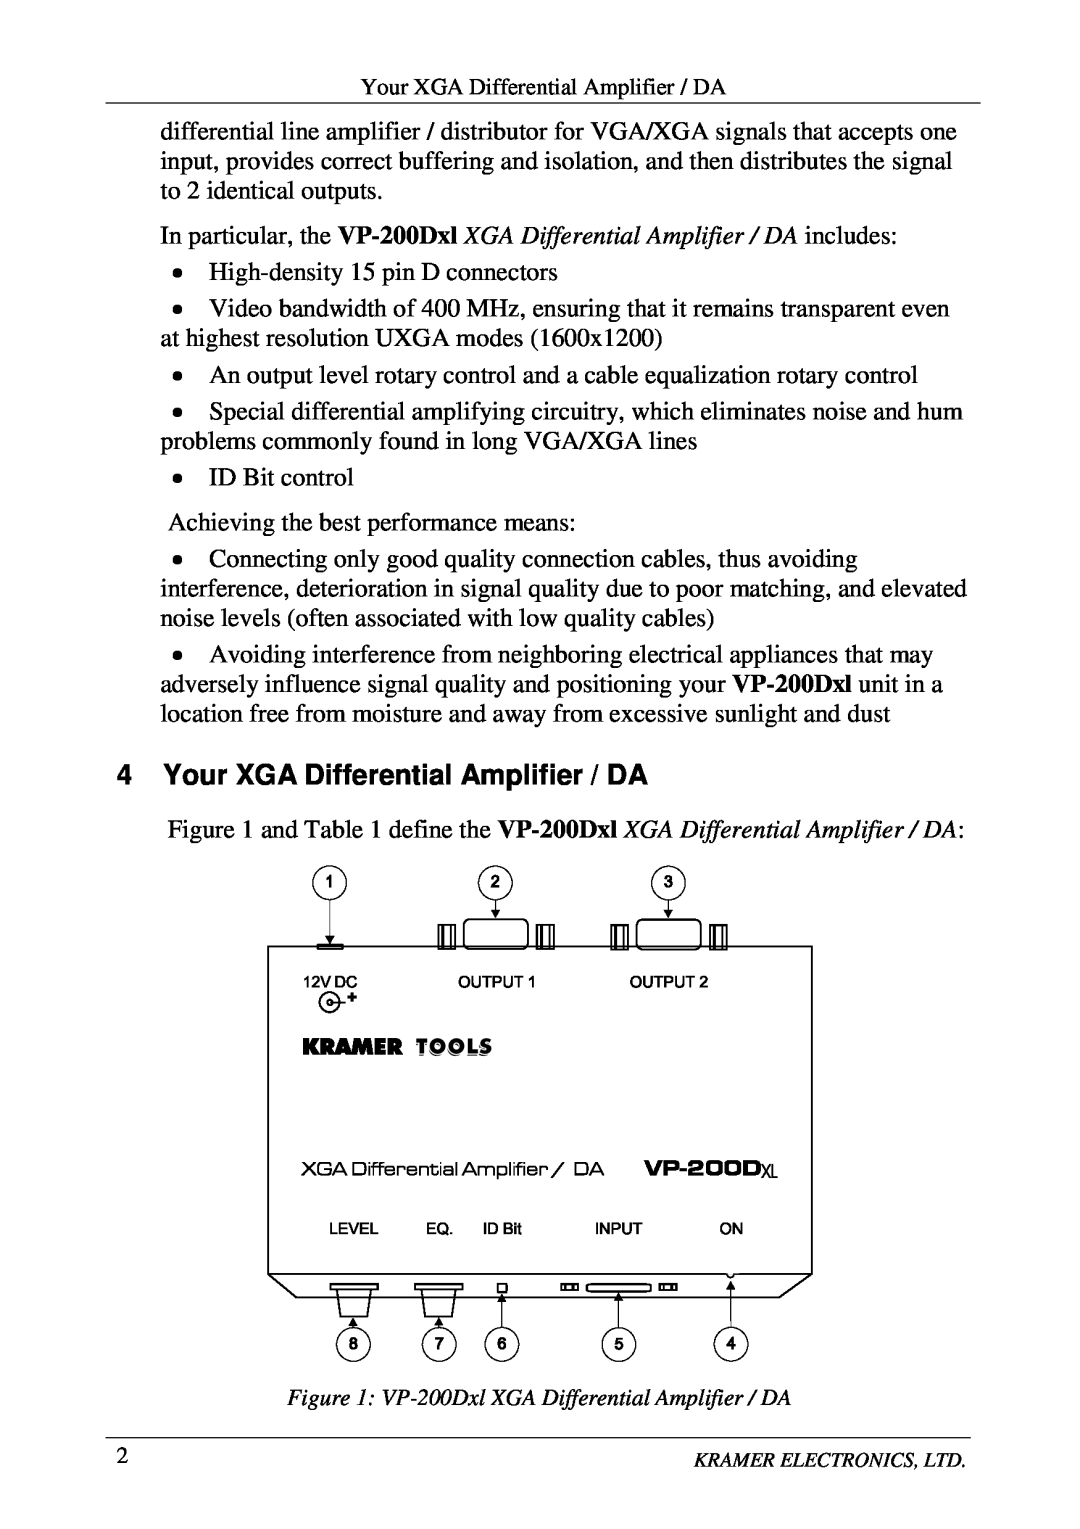 Kramer Electronics VP-200Dxl user manual a wp t p O tp, In particular, the rl9DAAX XGA Differential Amplifier / DA includes 